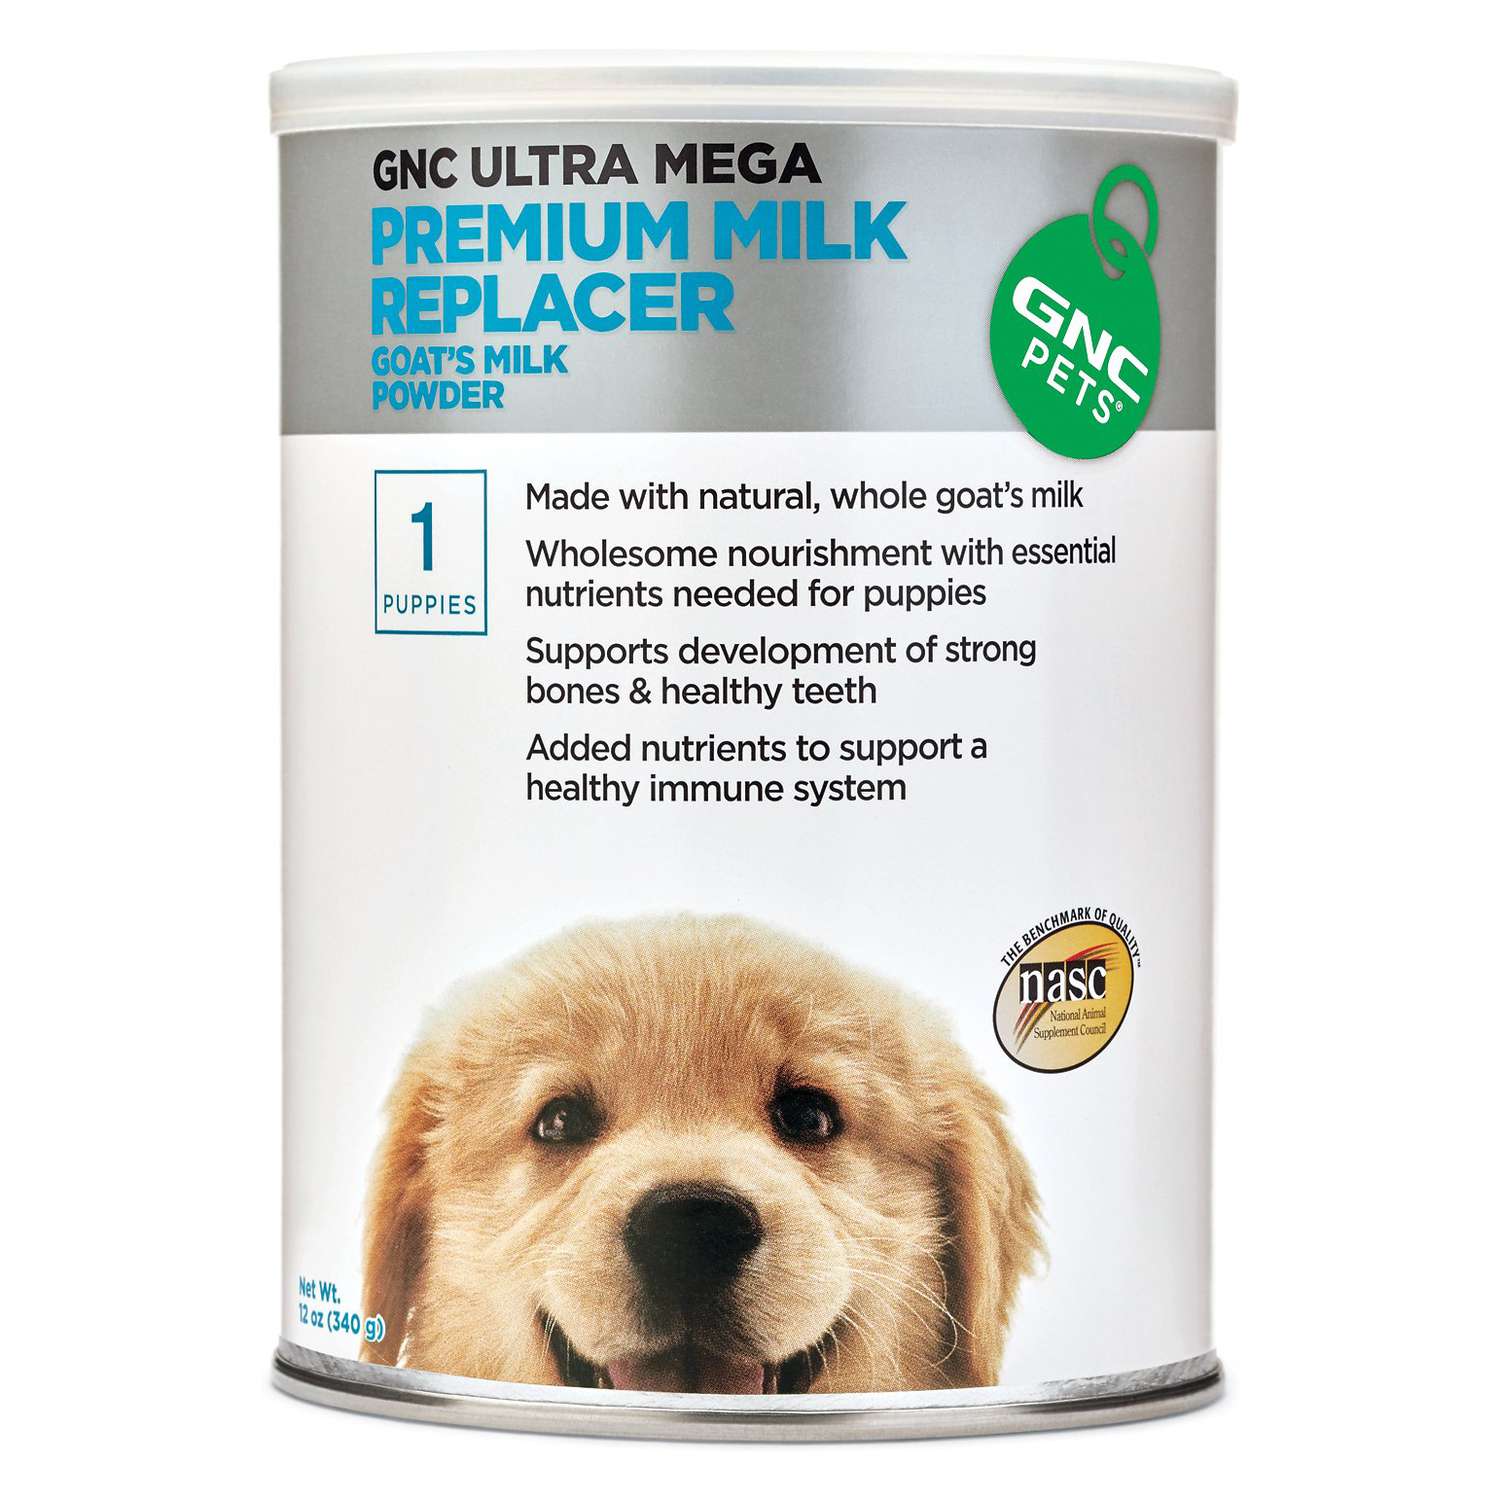 gnc-pets-ultra-mega-premium-milk-replacer-goat's-milk-puppy-powder-formula